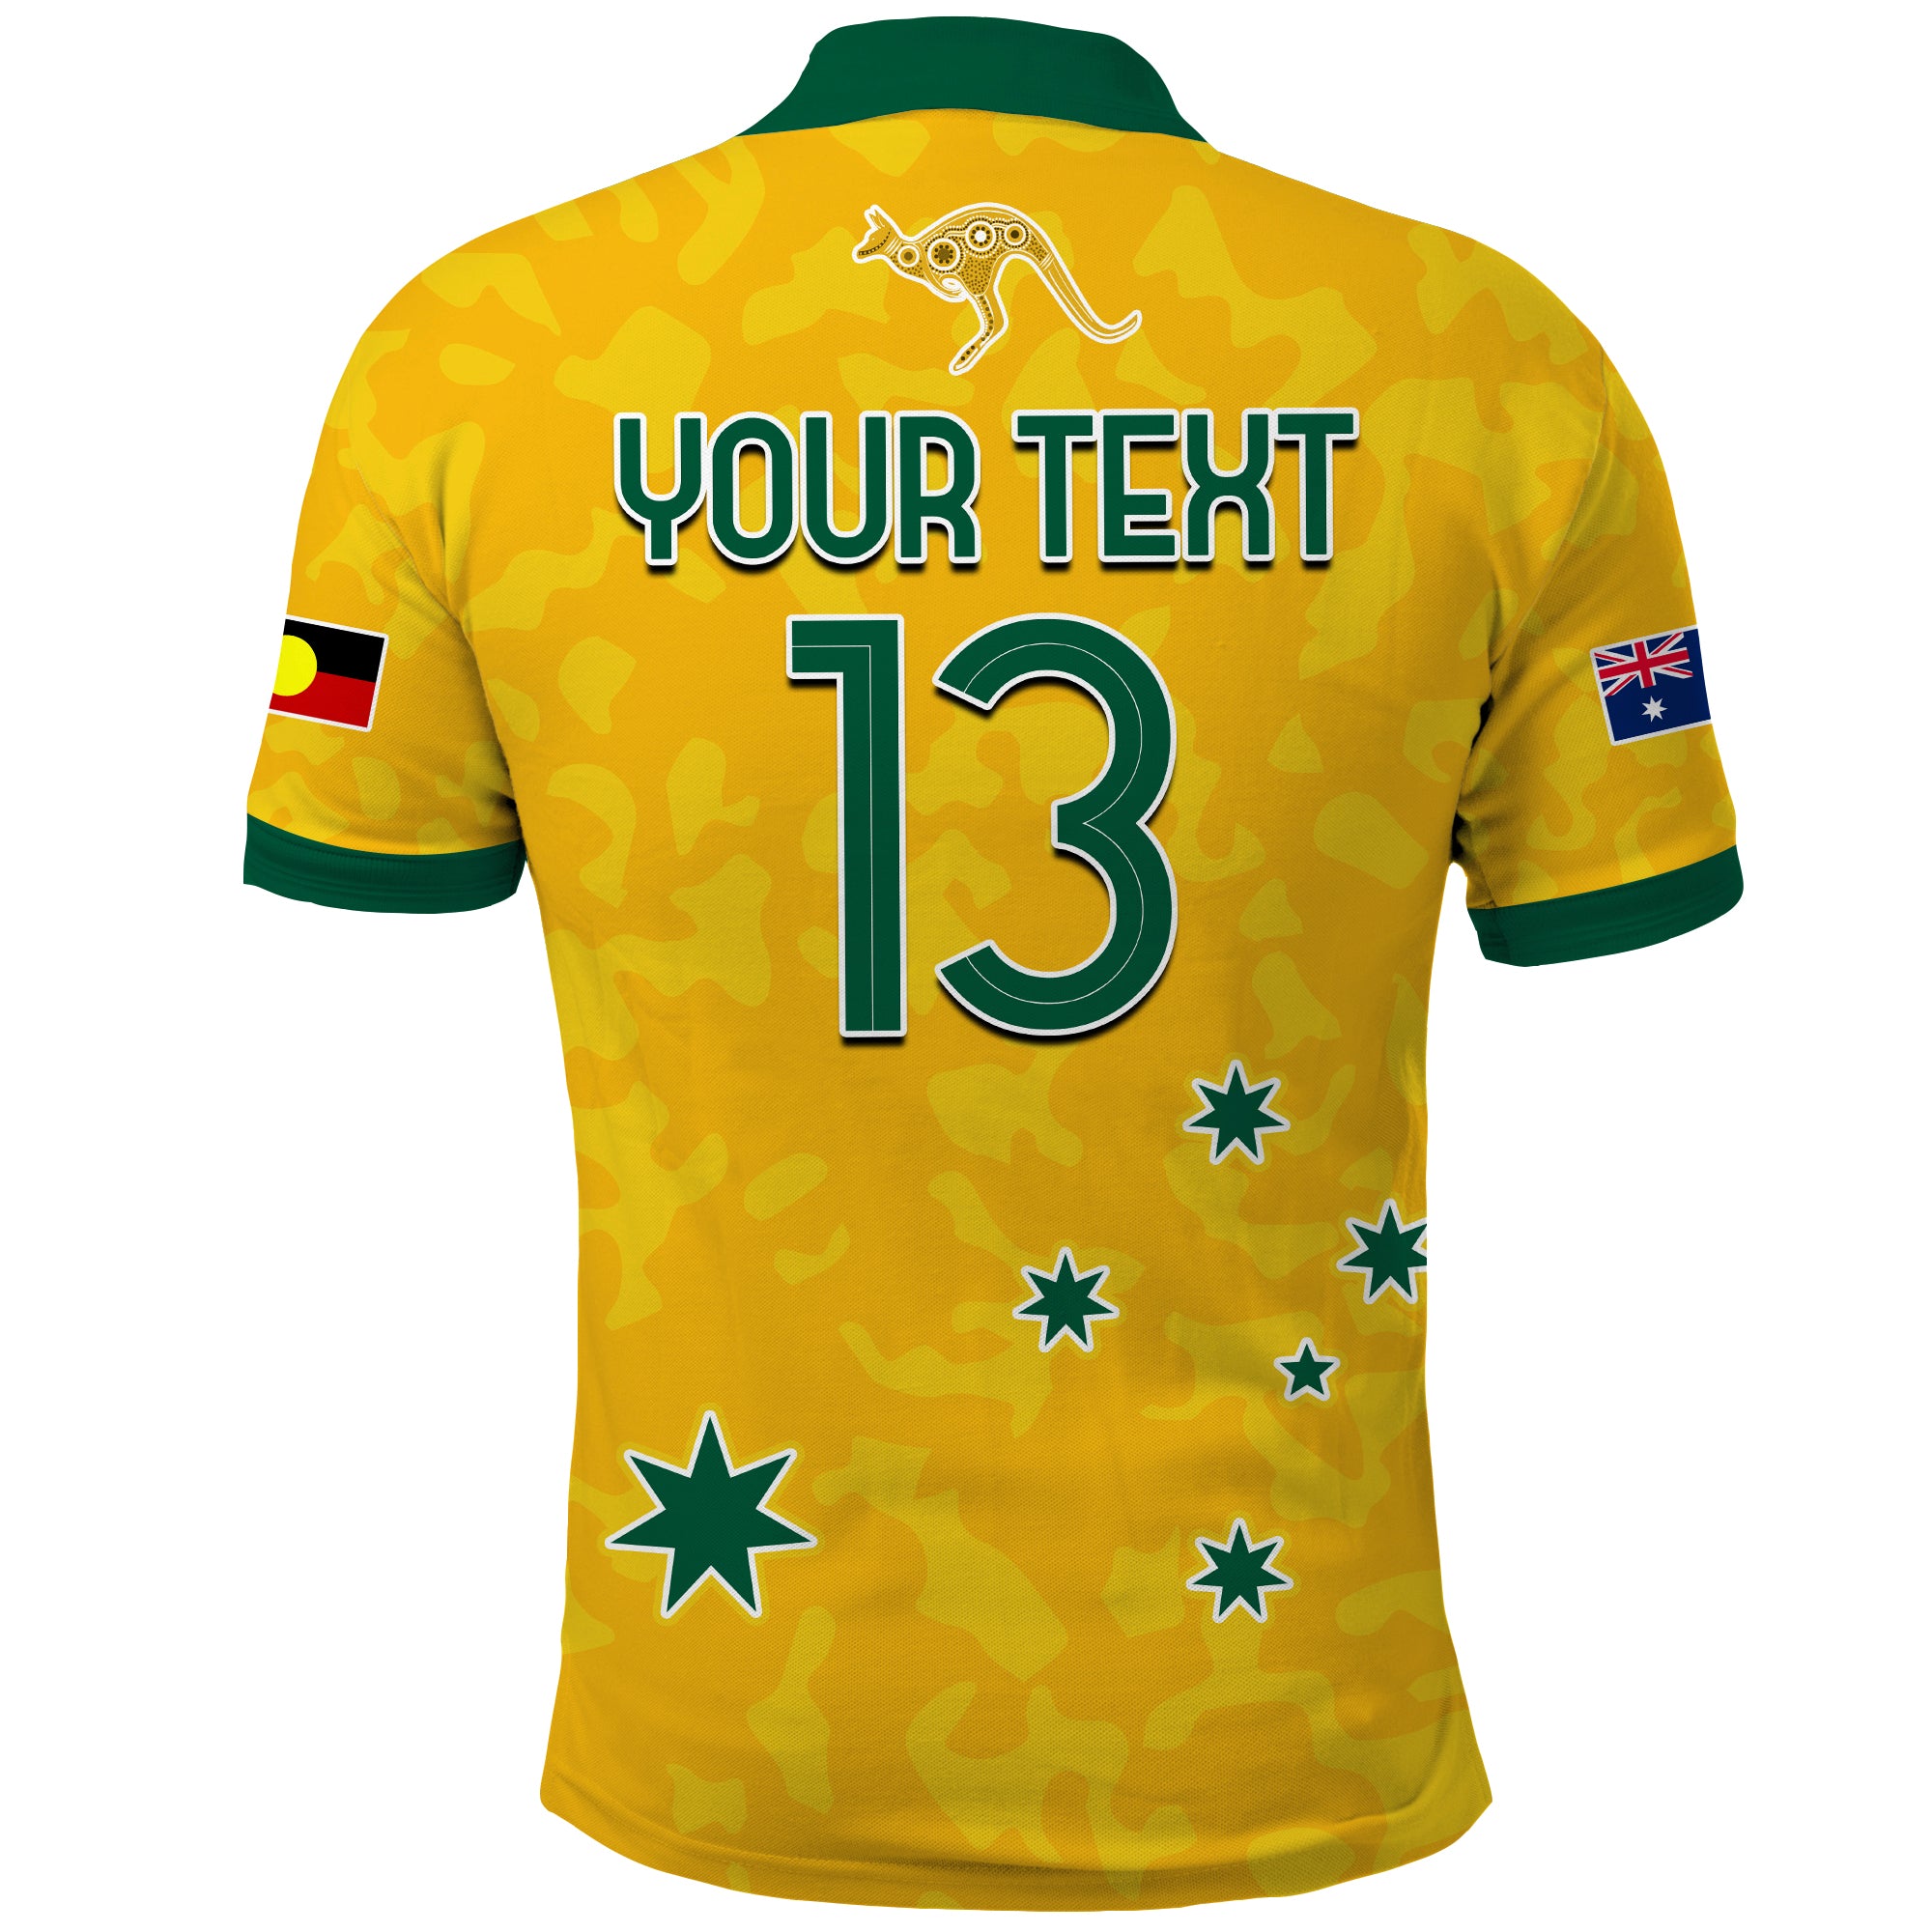 (Custom Text and Number) Australia Soccer Polo Shirt World Cup Football 2023 Socceroos with Kangaroos - MATILDAS LT13